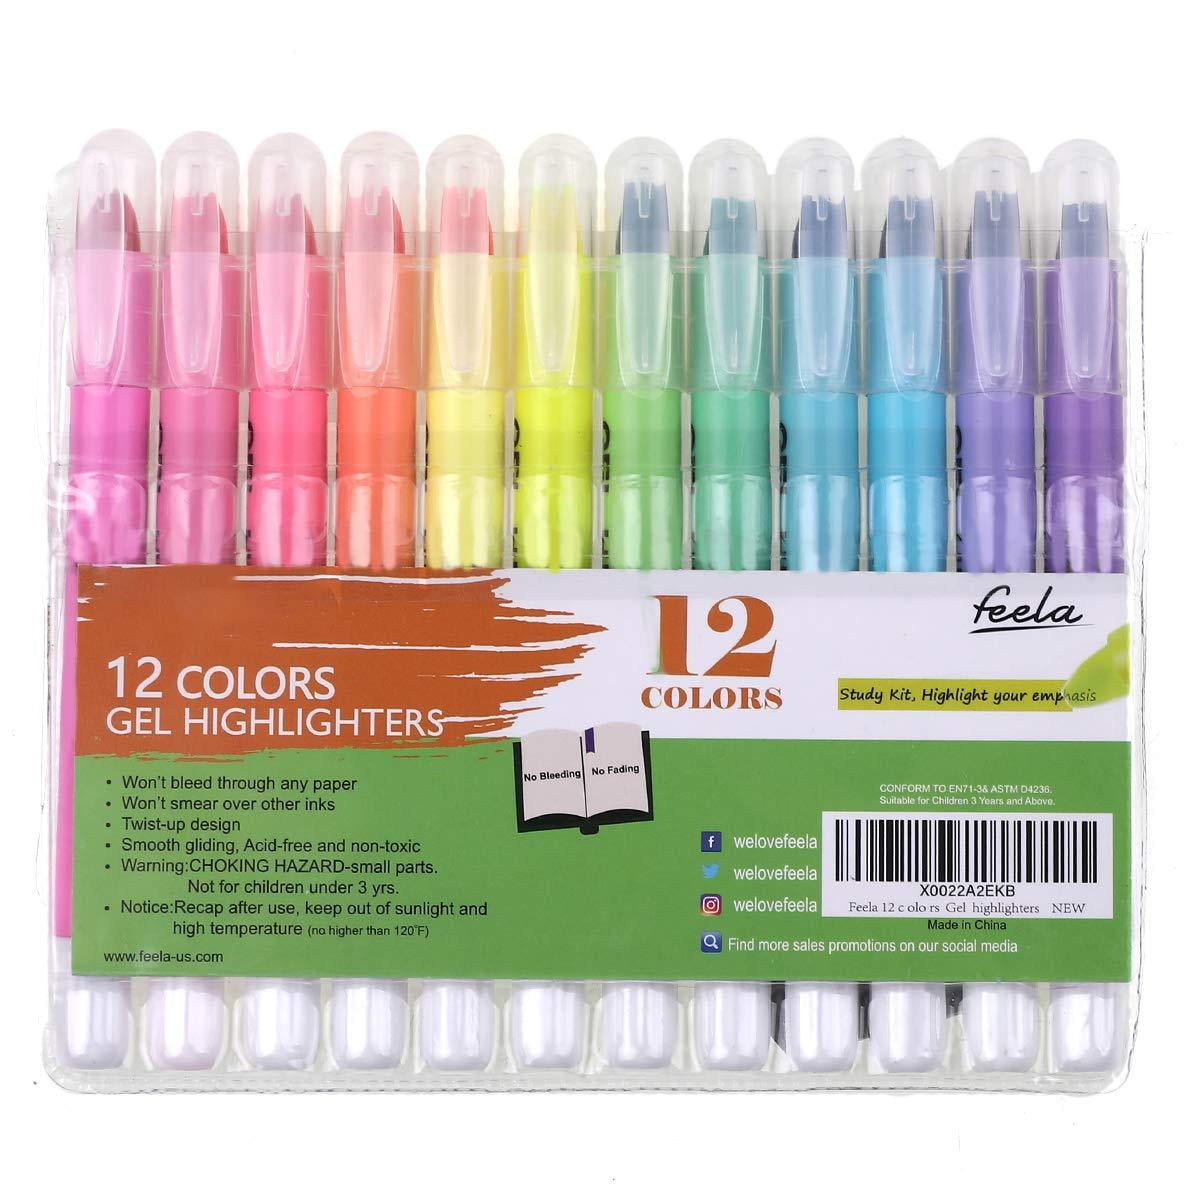 feela 12 Colors Bible Gel Highlighters, Gel Highlighter Markers Study Kit, Good for Highlighting Journal School Office